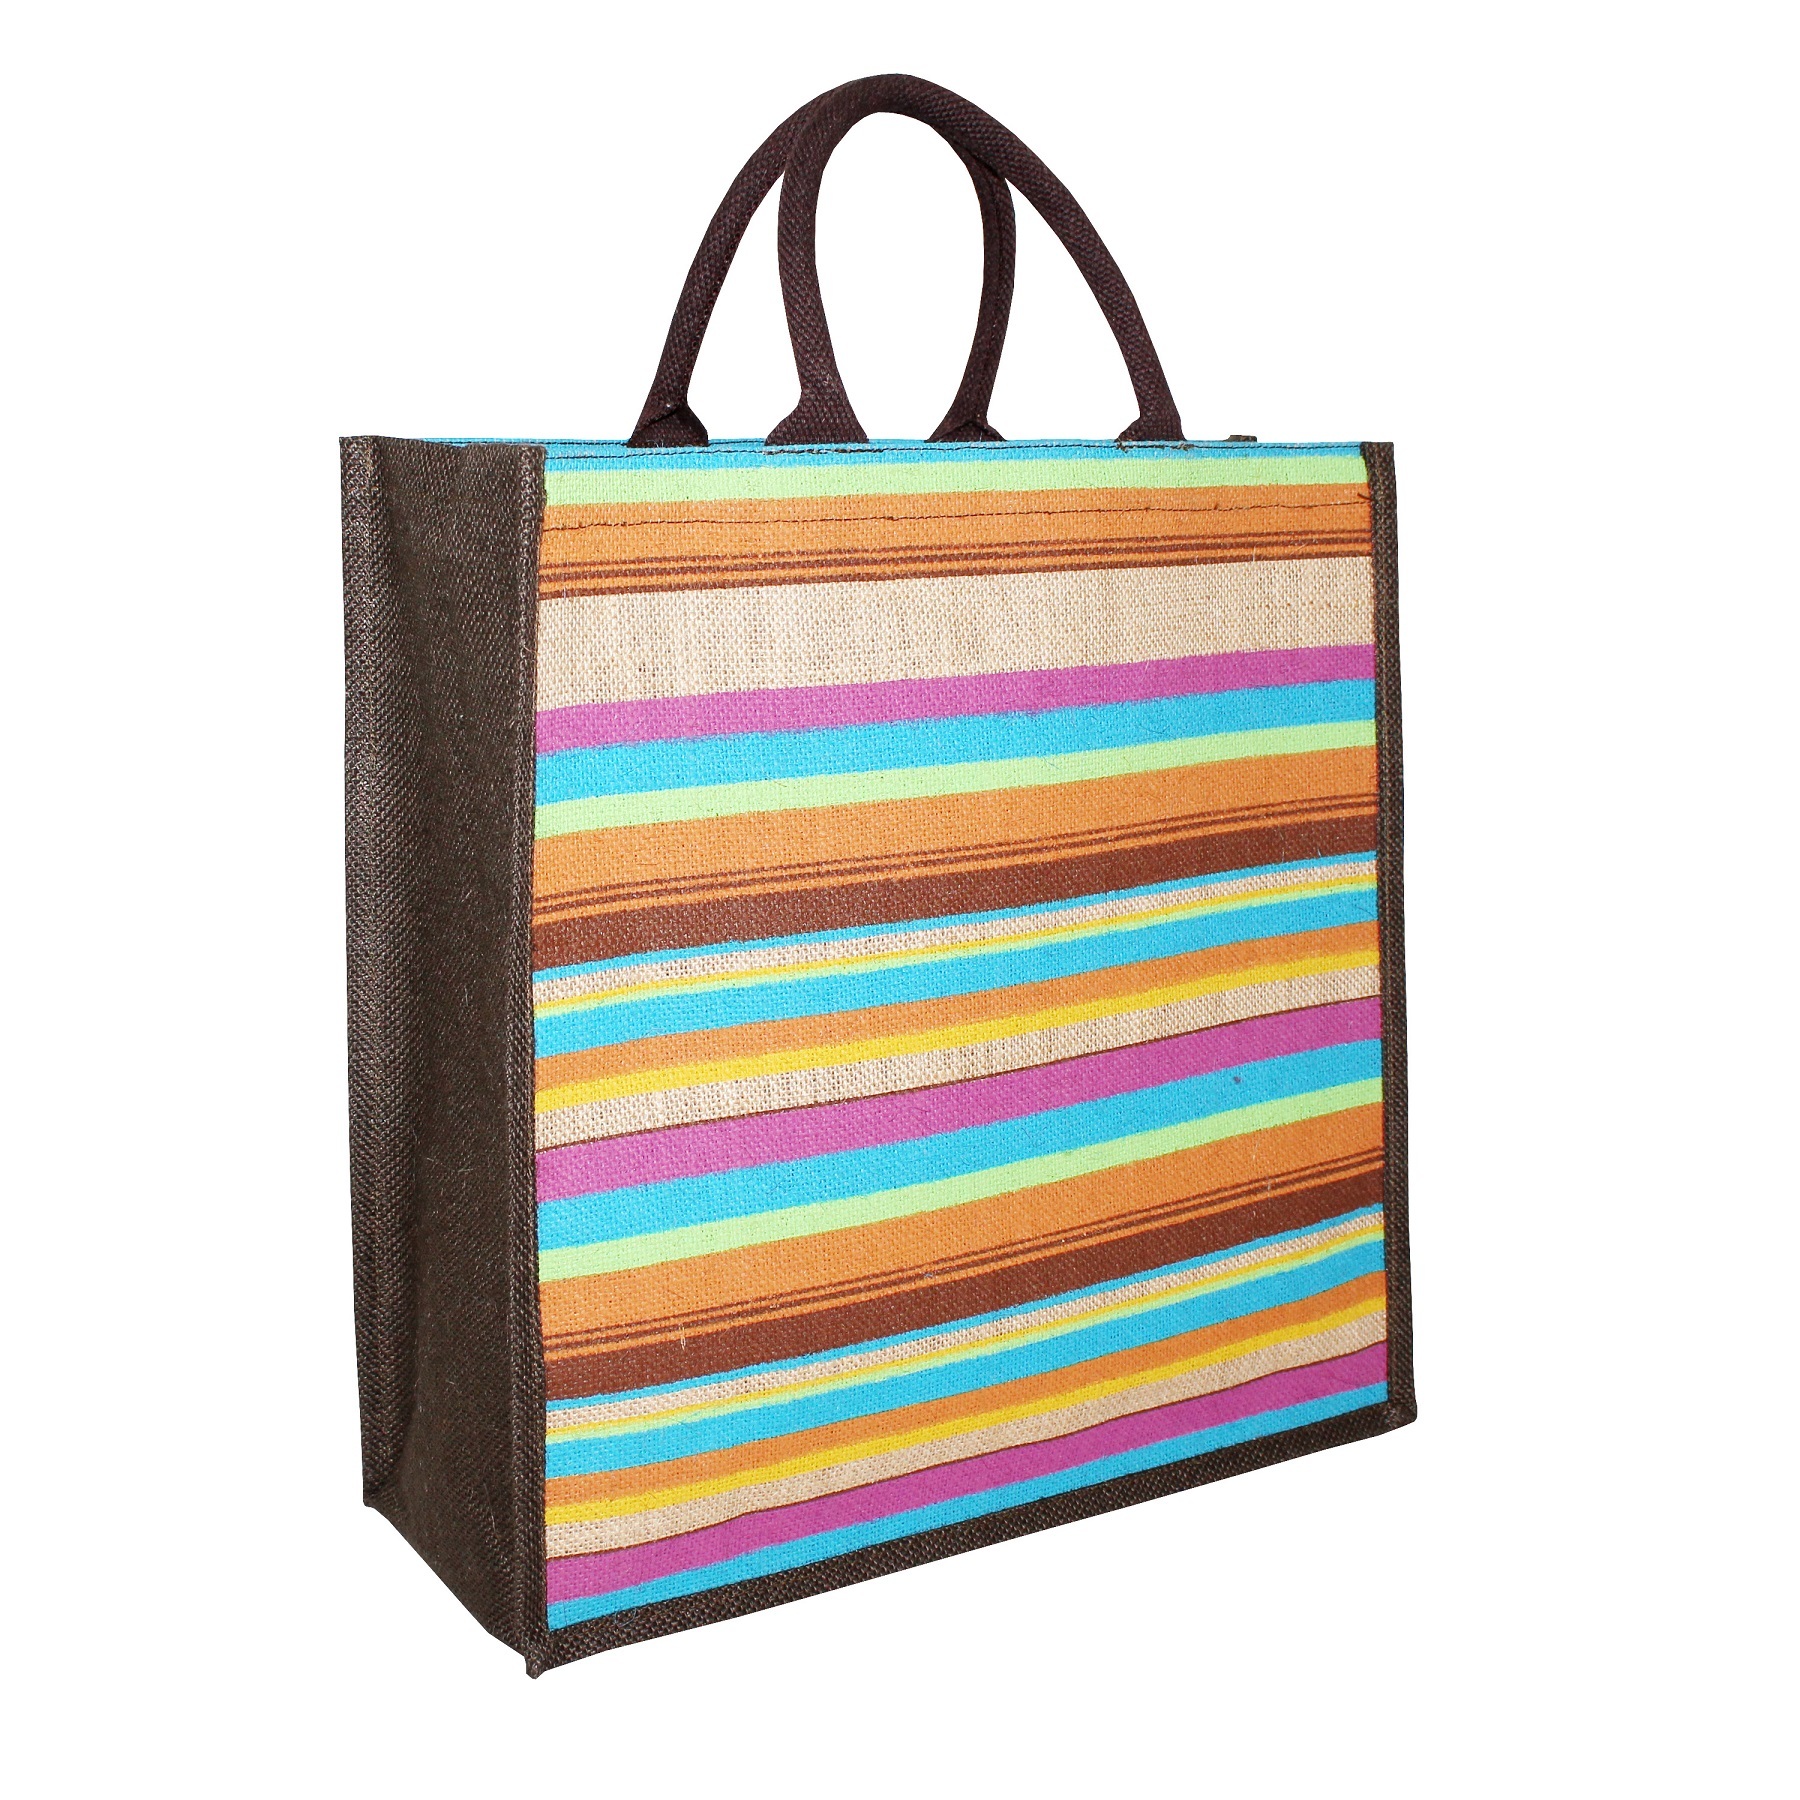 Allover Striped Print Natural Color Jute Tote Bag